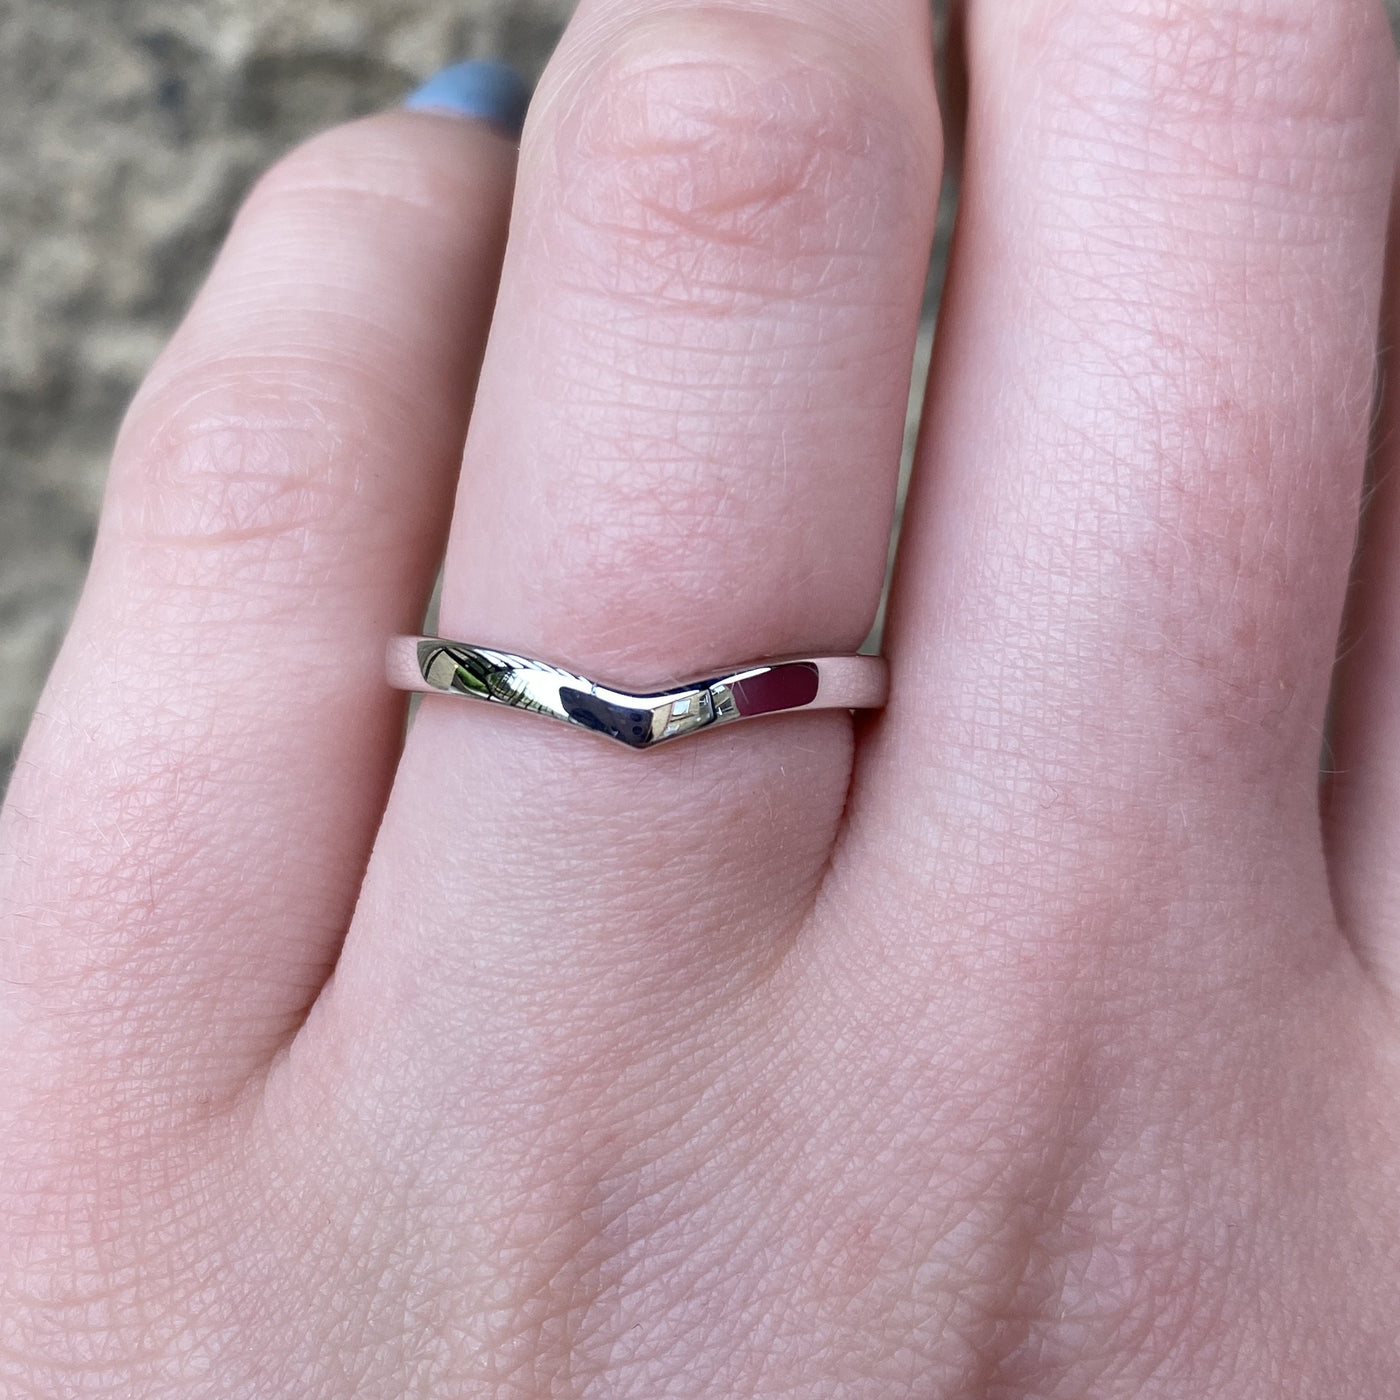 Clara - Polished Wishbone Shaped Wedding Ring 2.3mm Width - Made-to-Order